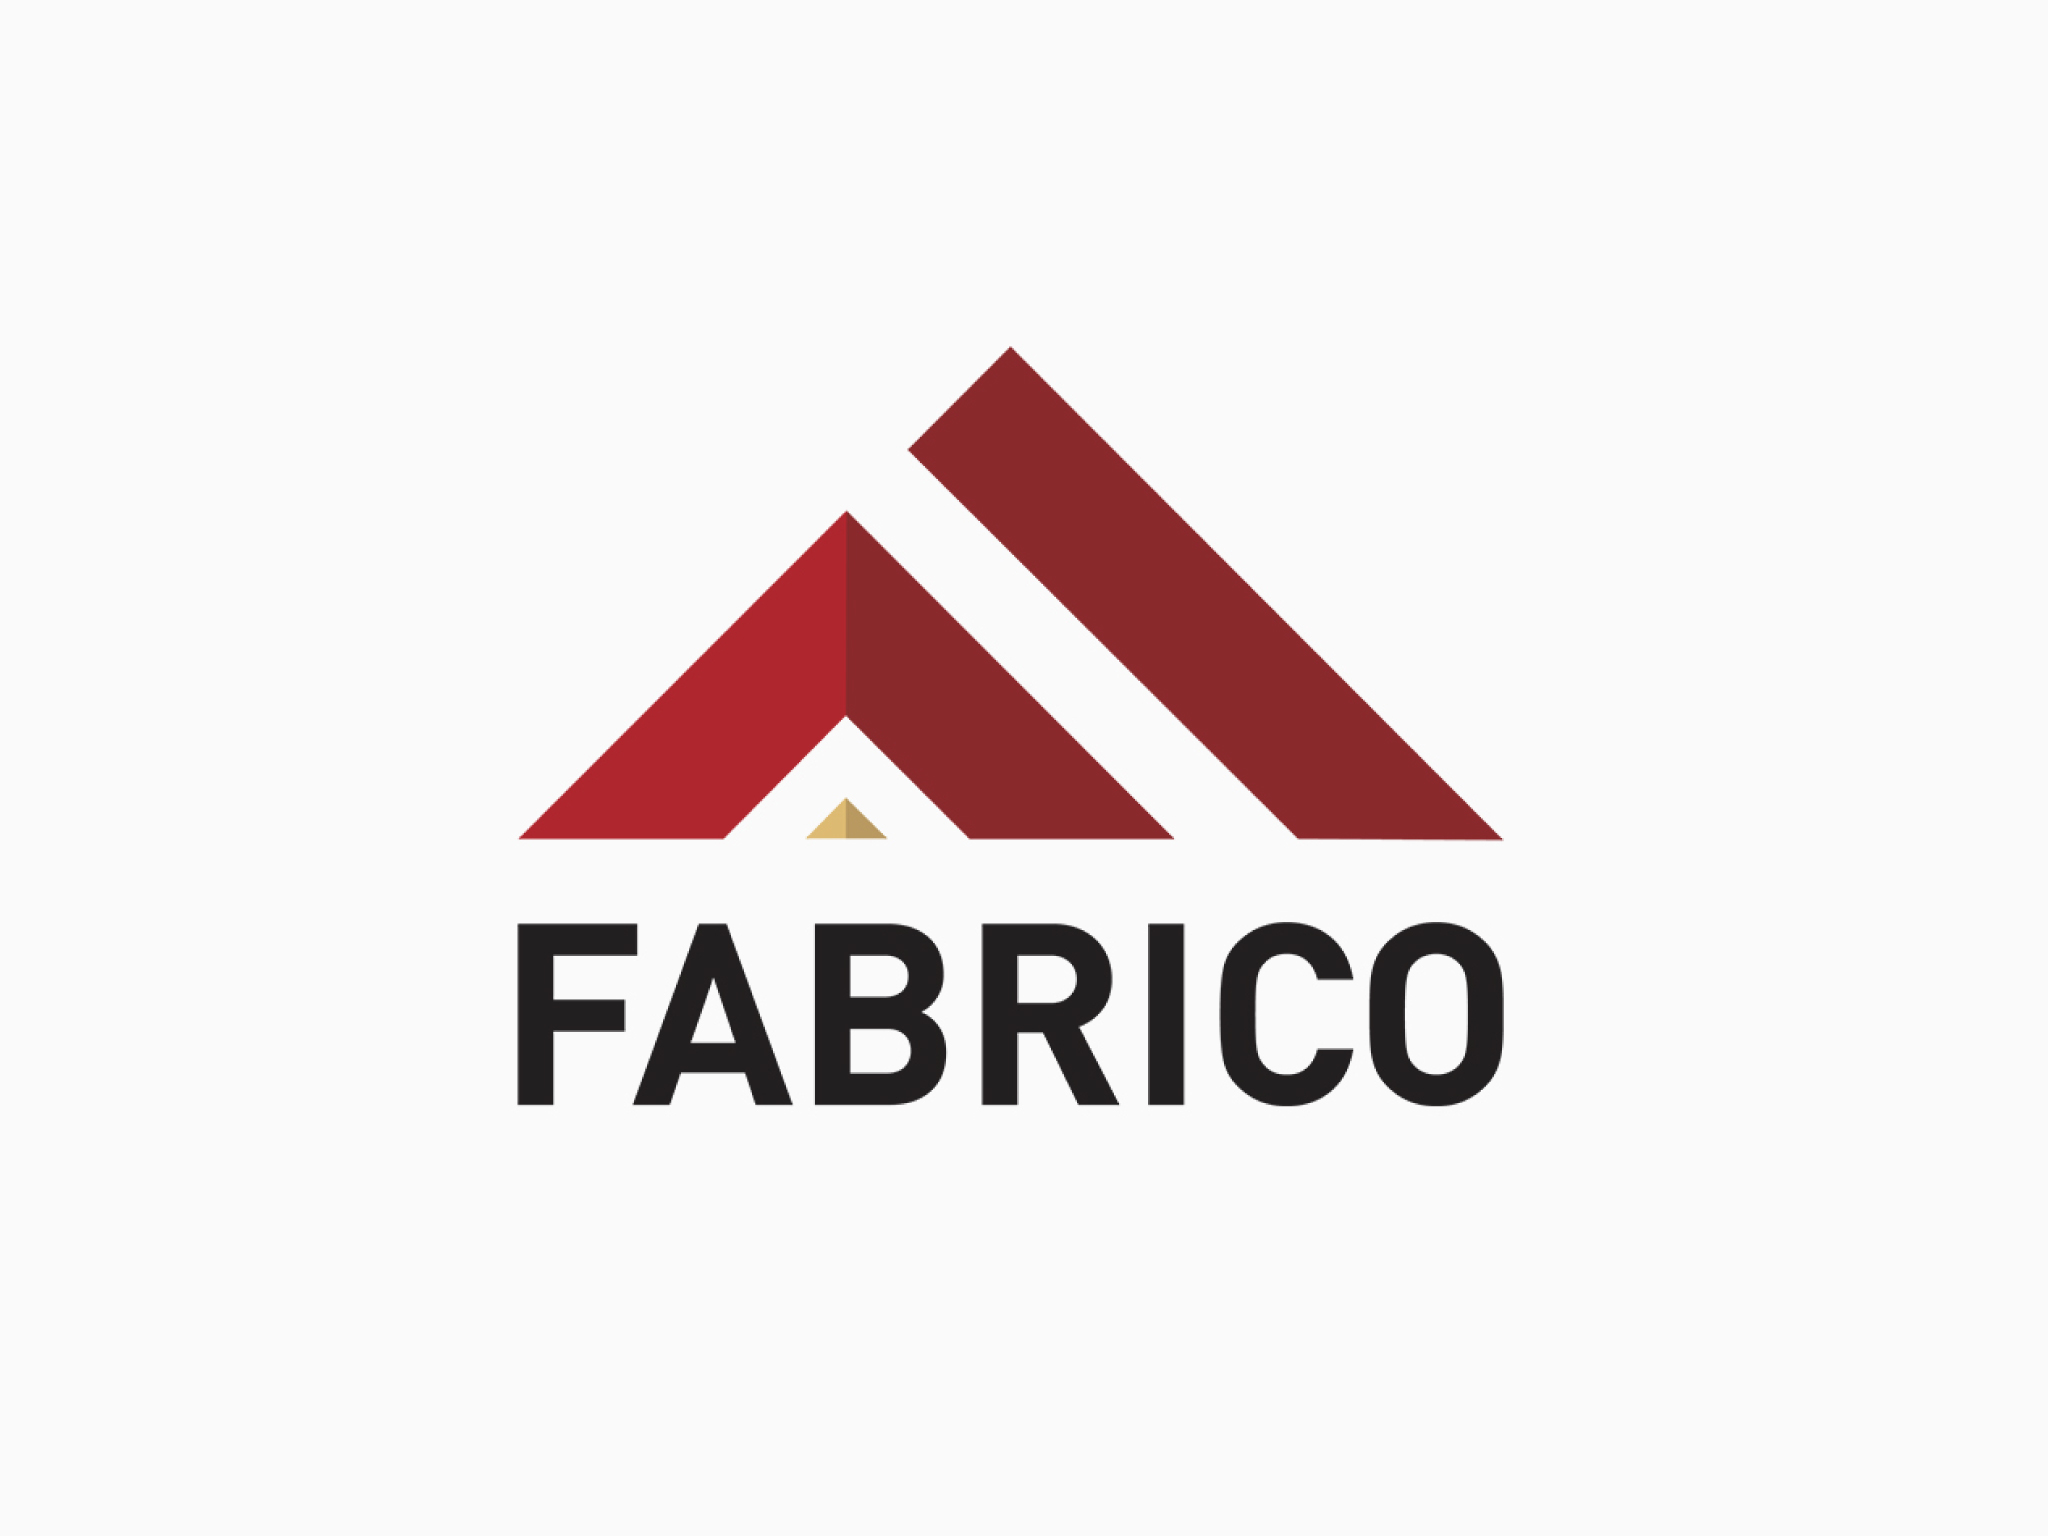 FABRICO Branding Example 1